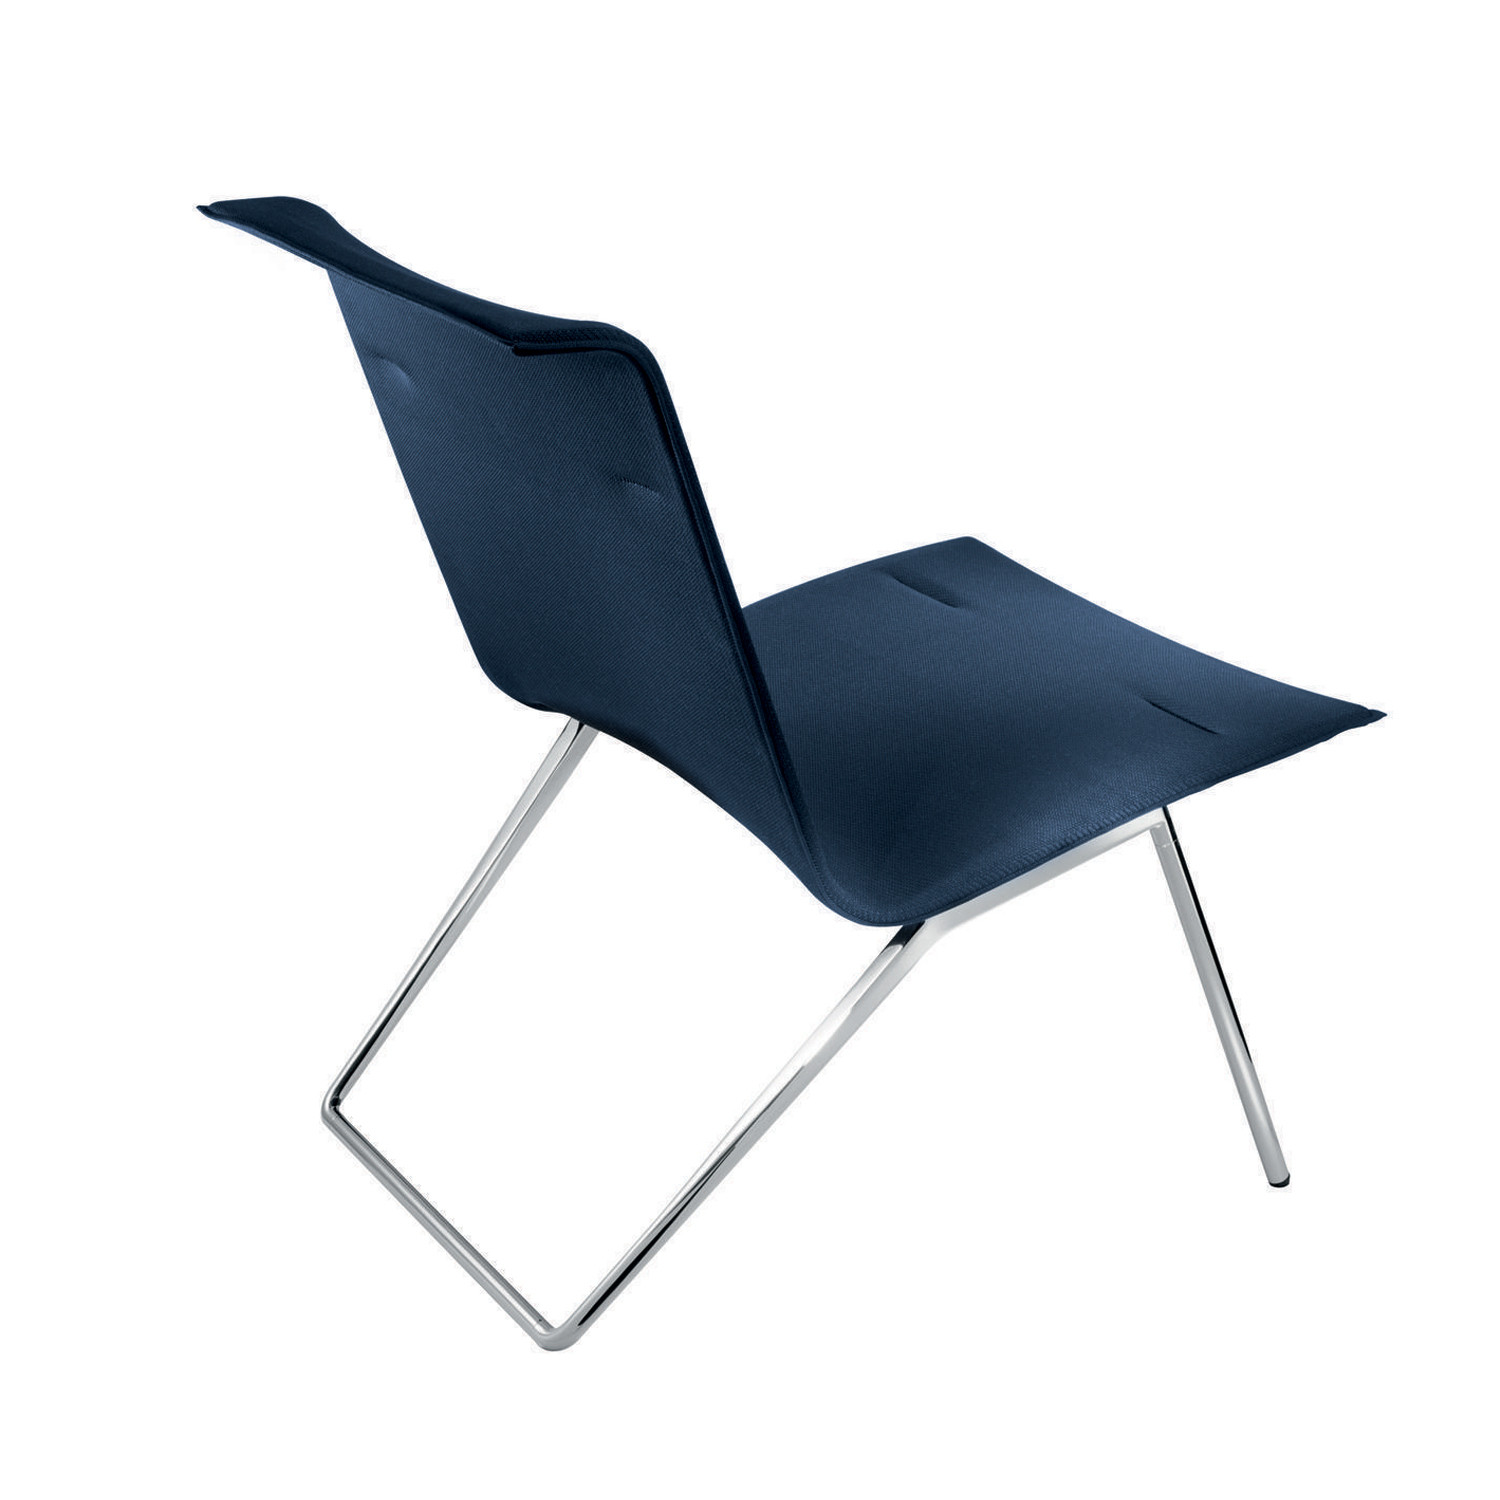 Velas Lounge Chair feature a tubular steel frame